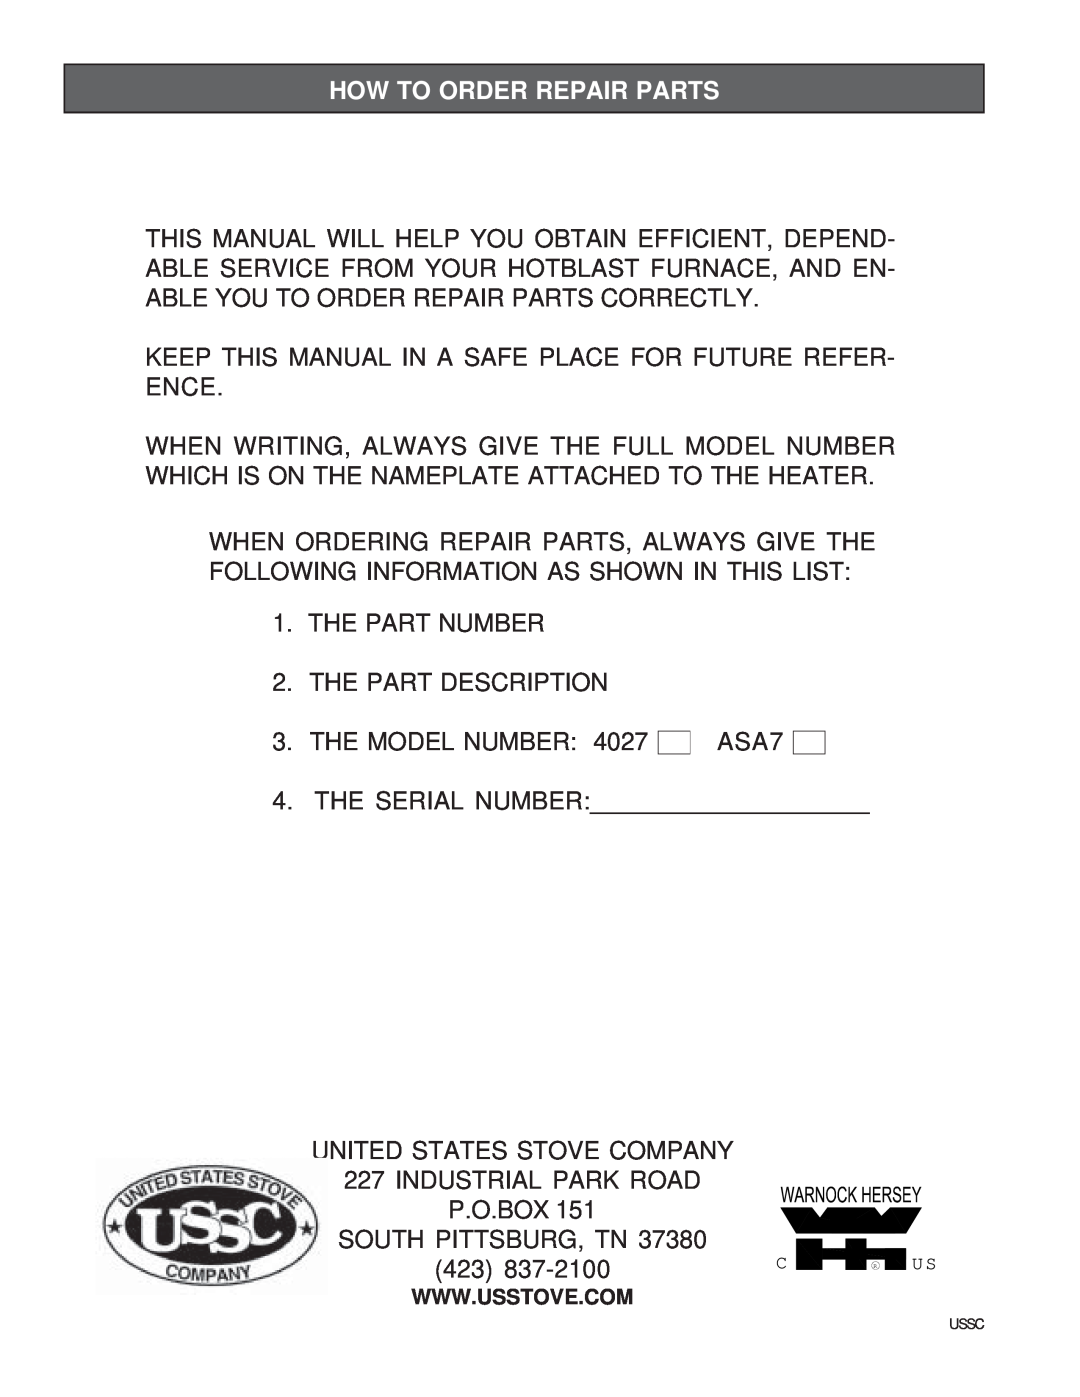 United States Stove ASA7, 4027 owner manual How To Order Repair Parts 